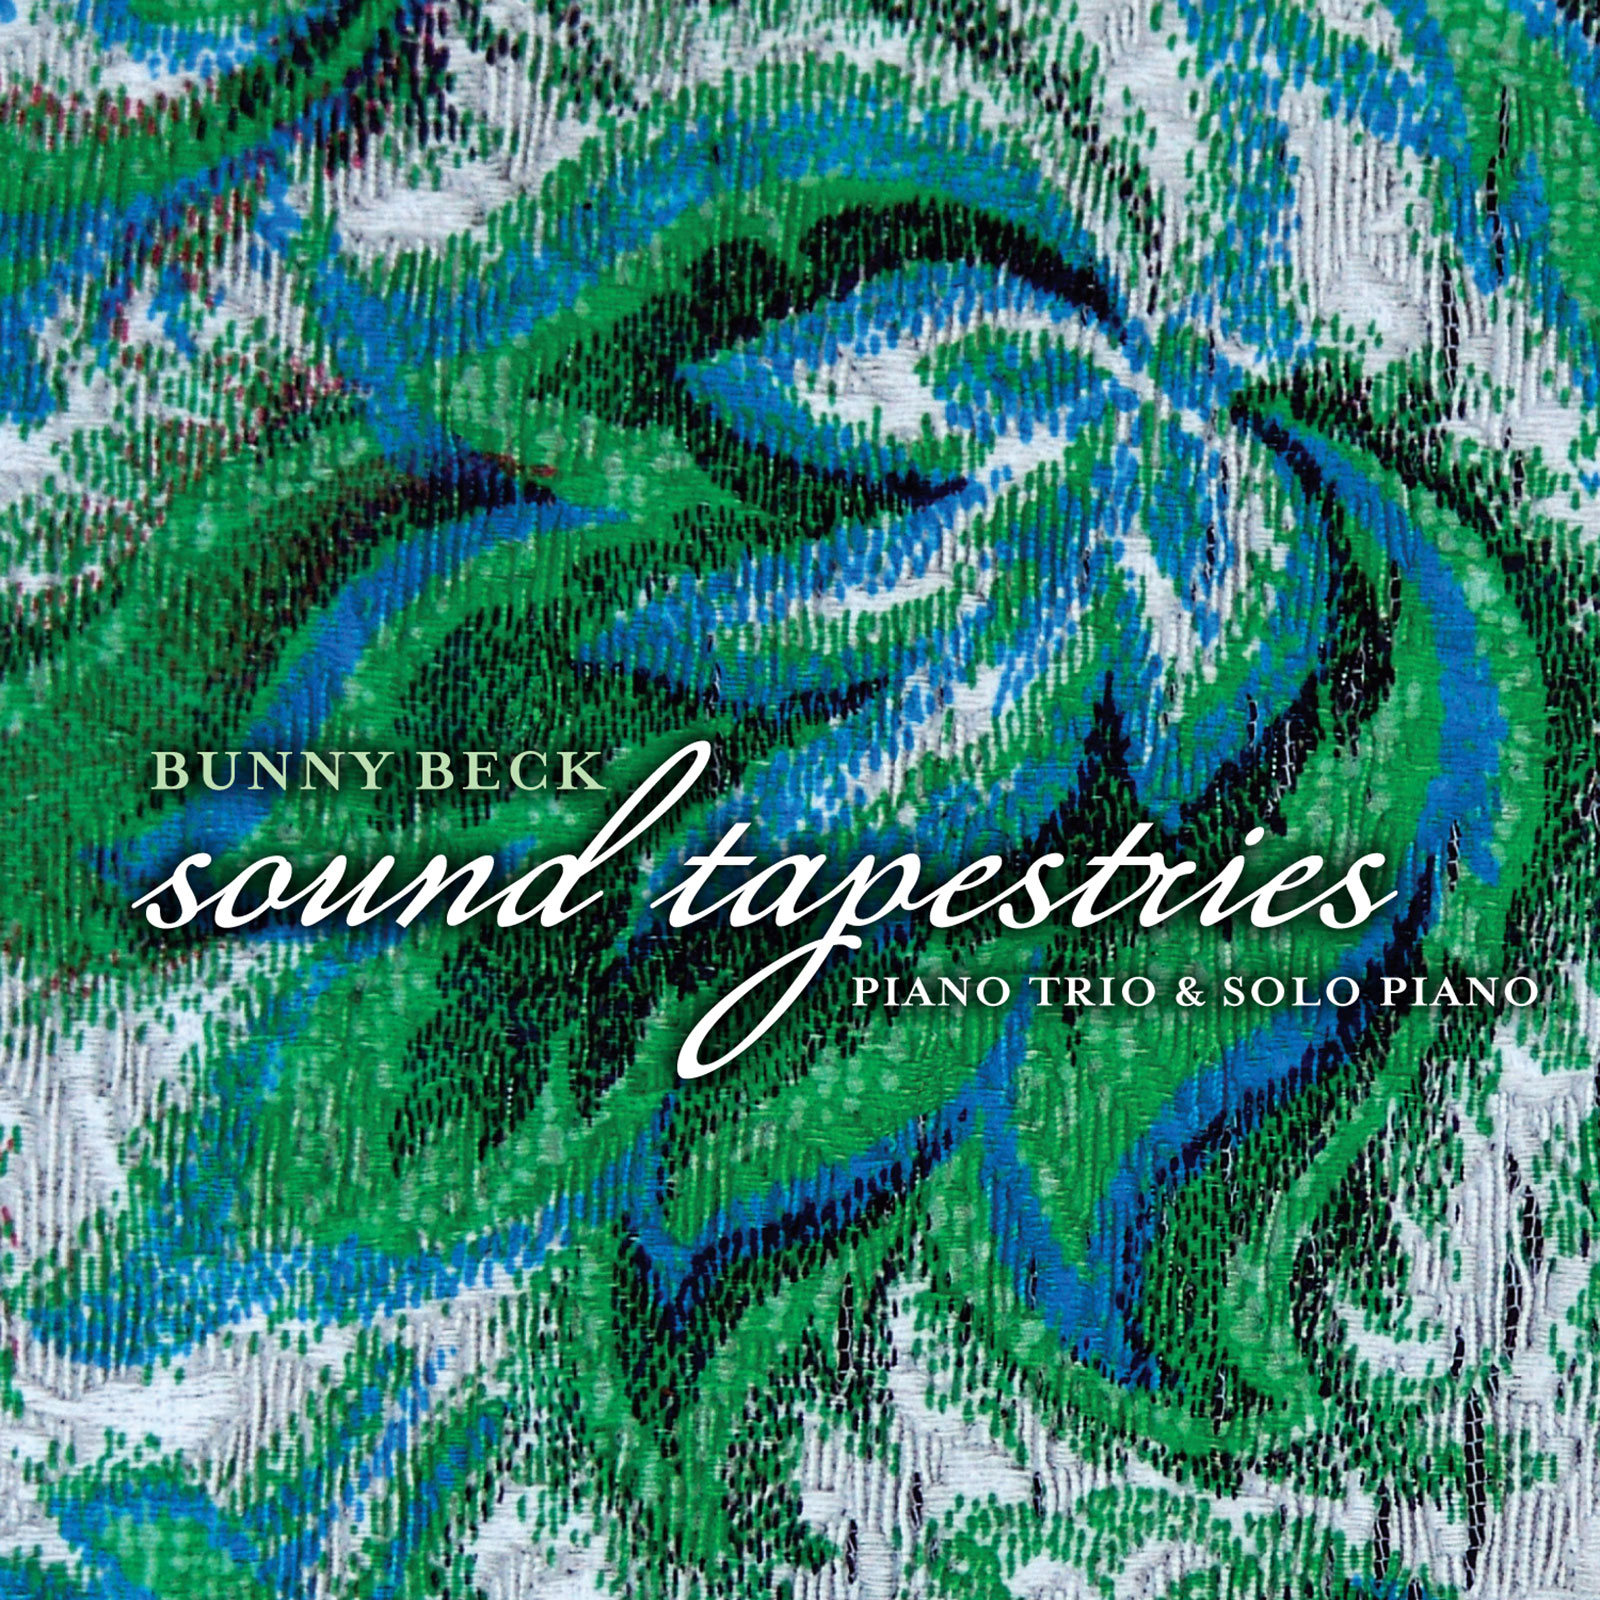 Sound Tapestries